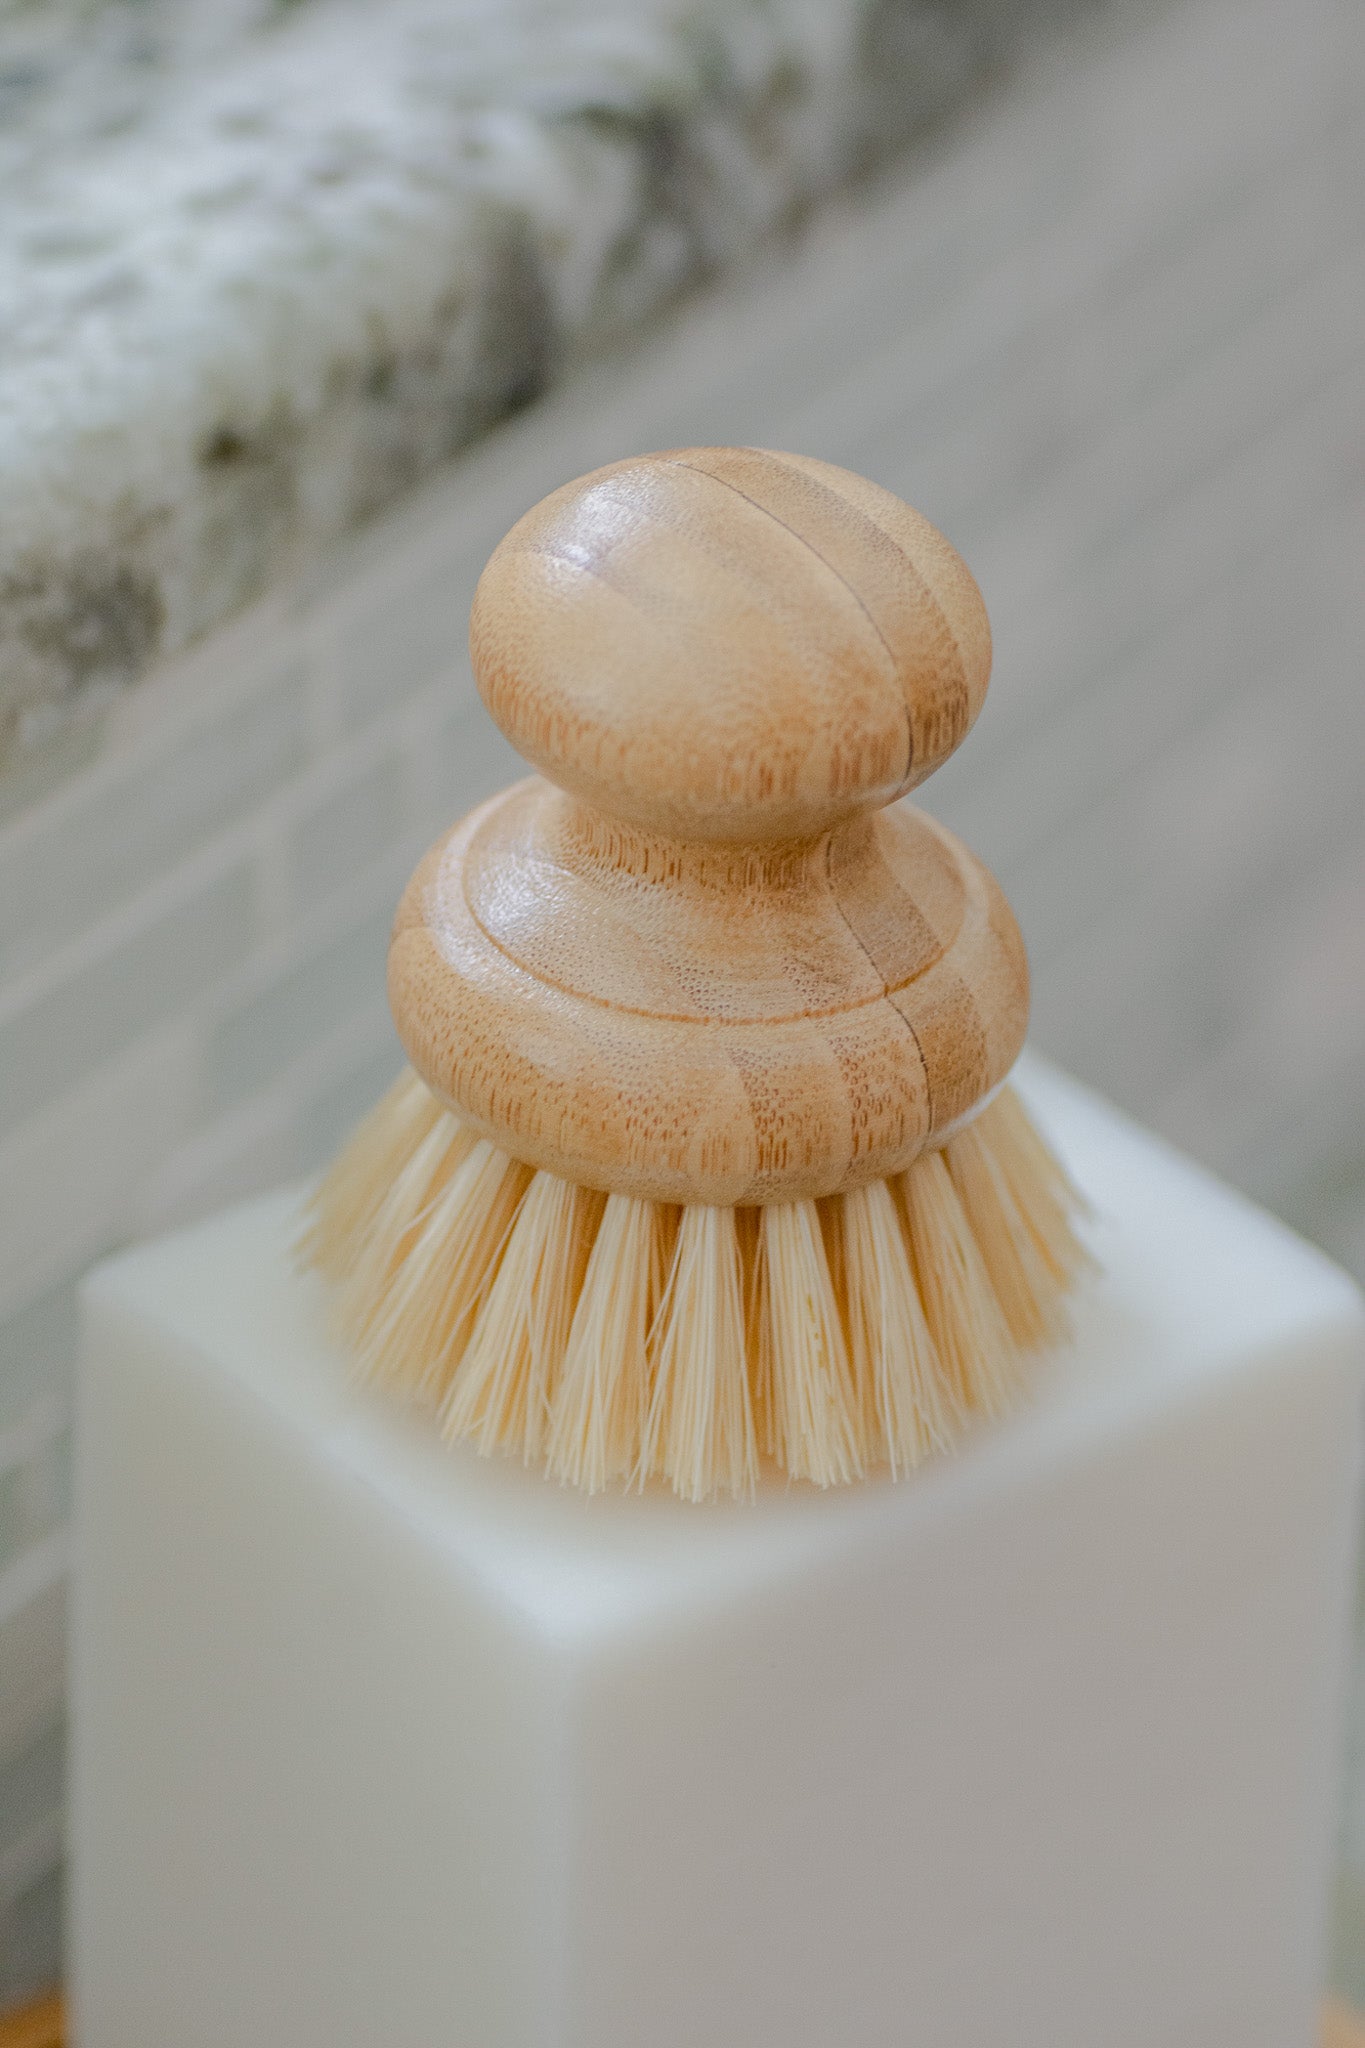 Brush Soap – SOMETHING FROM SOMEWHERE